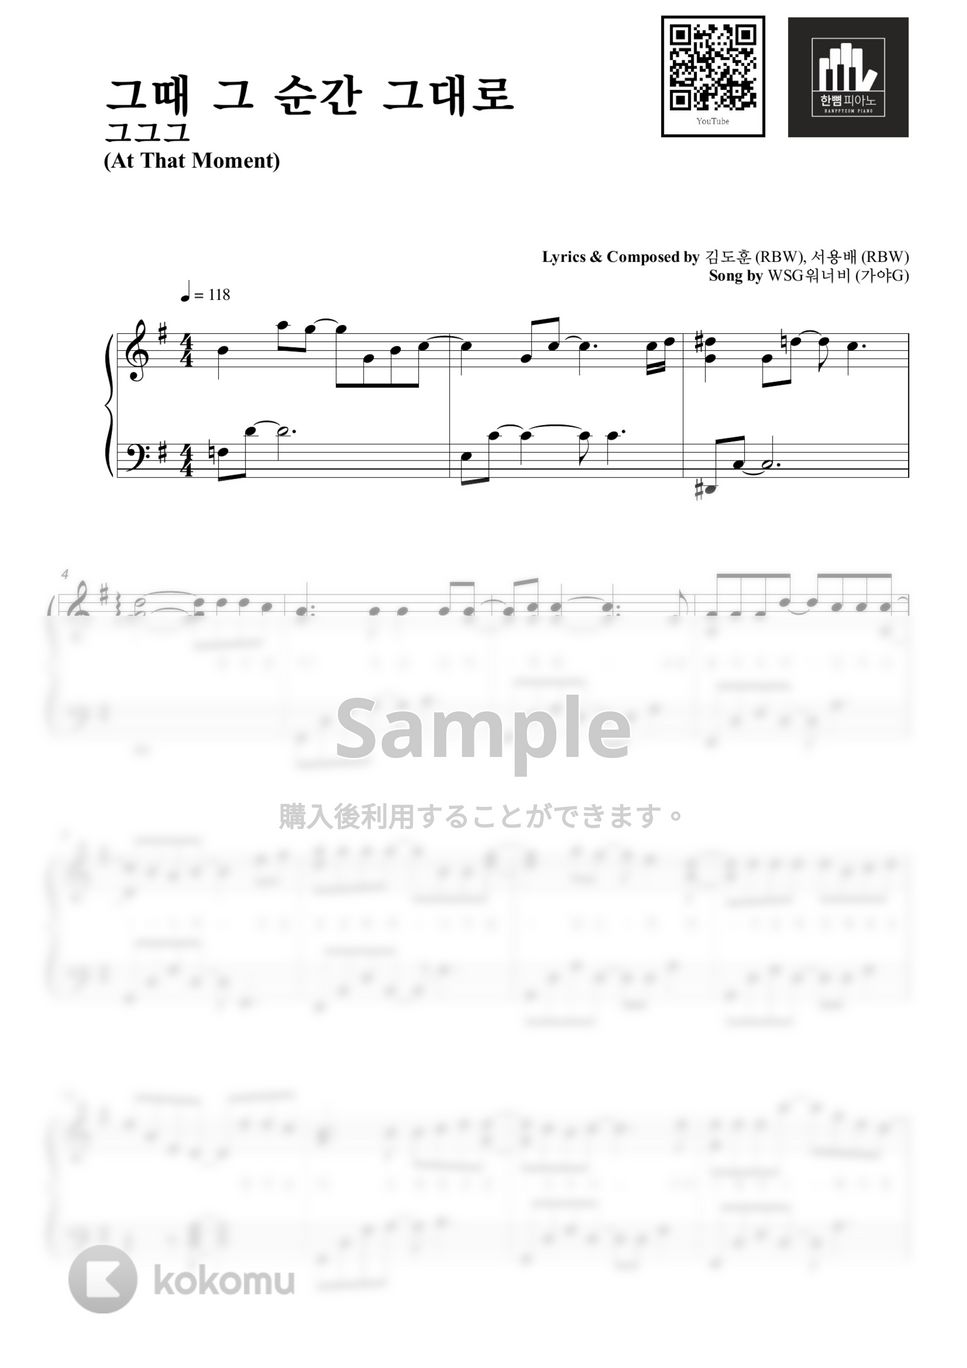 WSG WANNABE (Gaya-G) - At That Moment (PIANO COVER) by HANPPYEOMPIANO